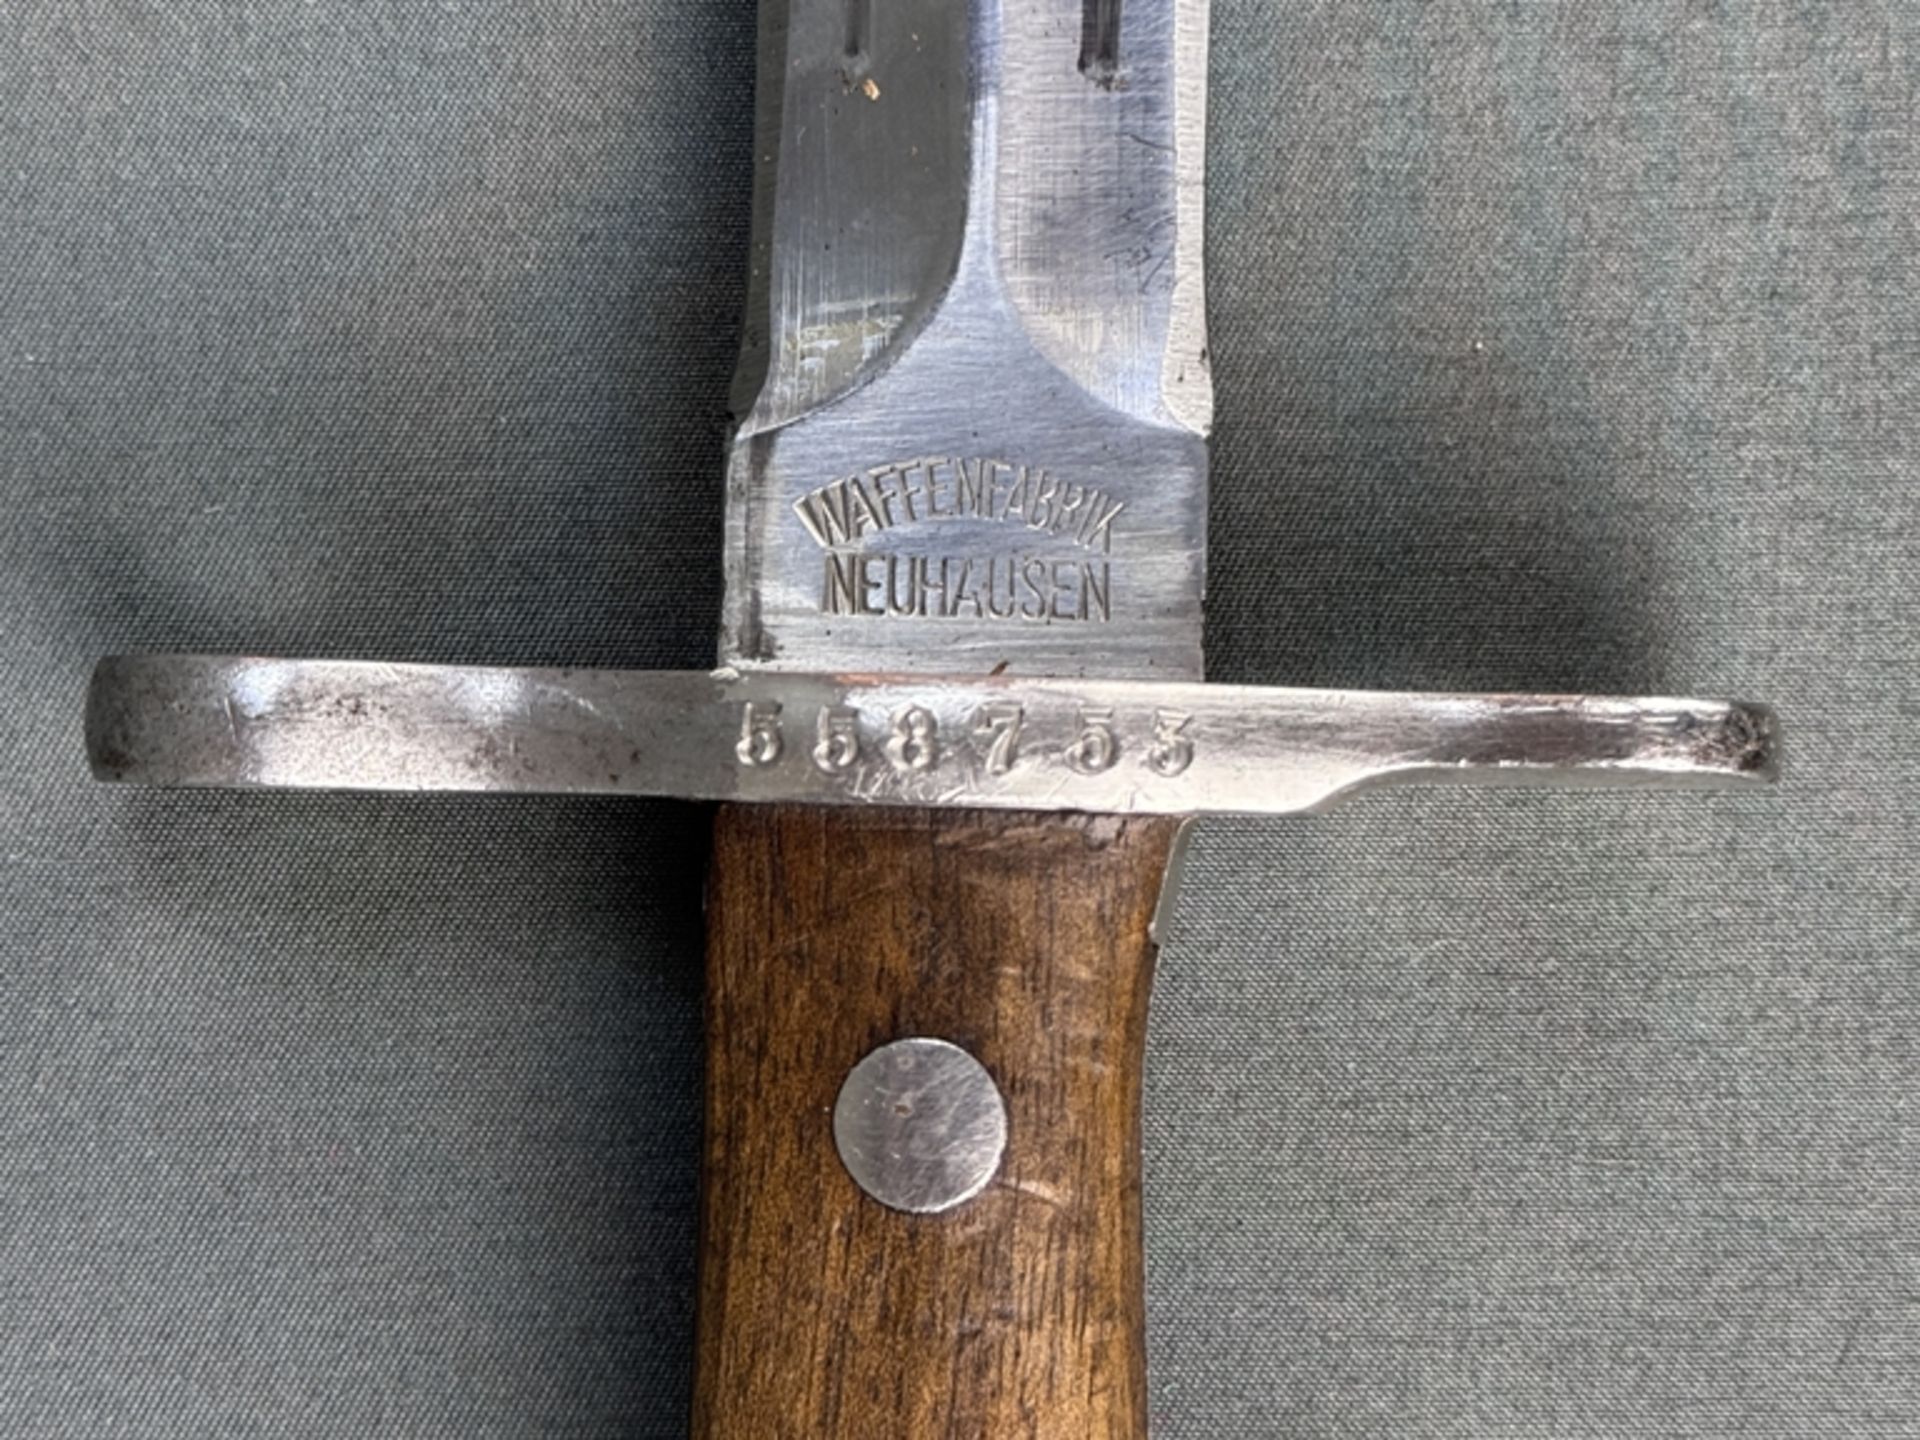 Sidearm/bayonet, Swiss ordnance, Switzerland, 1931, double-edged blade, "Waffenfabrik Neuhausen", o - Image 3 of 3